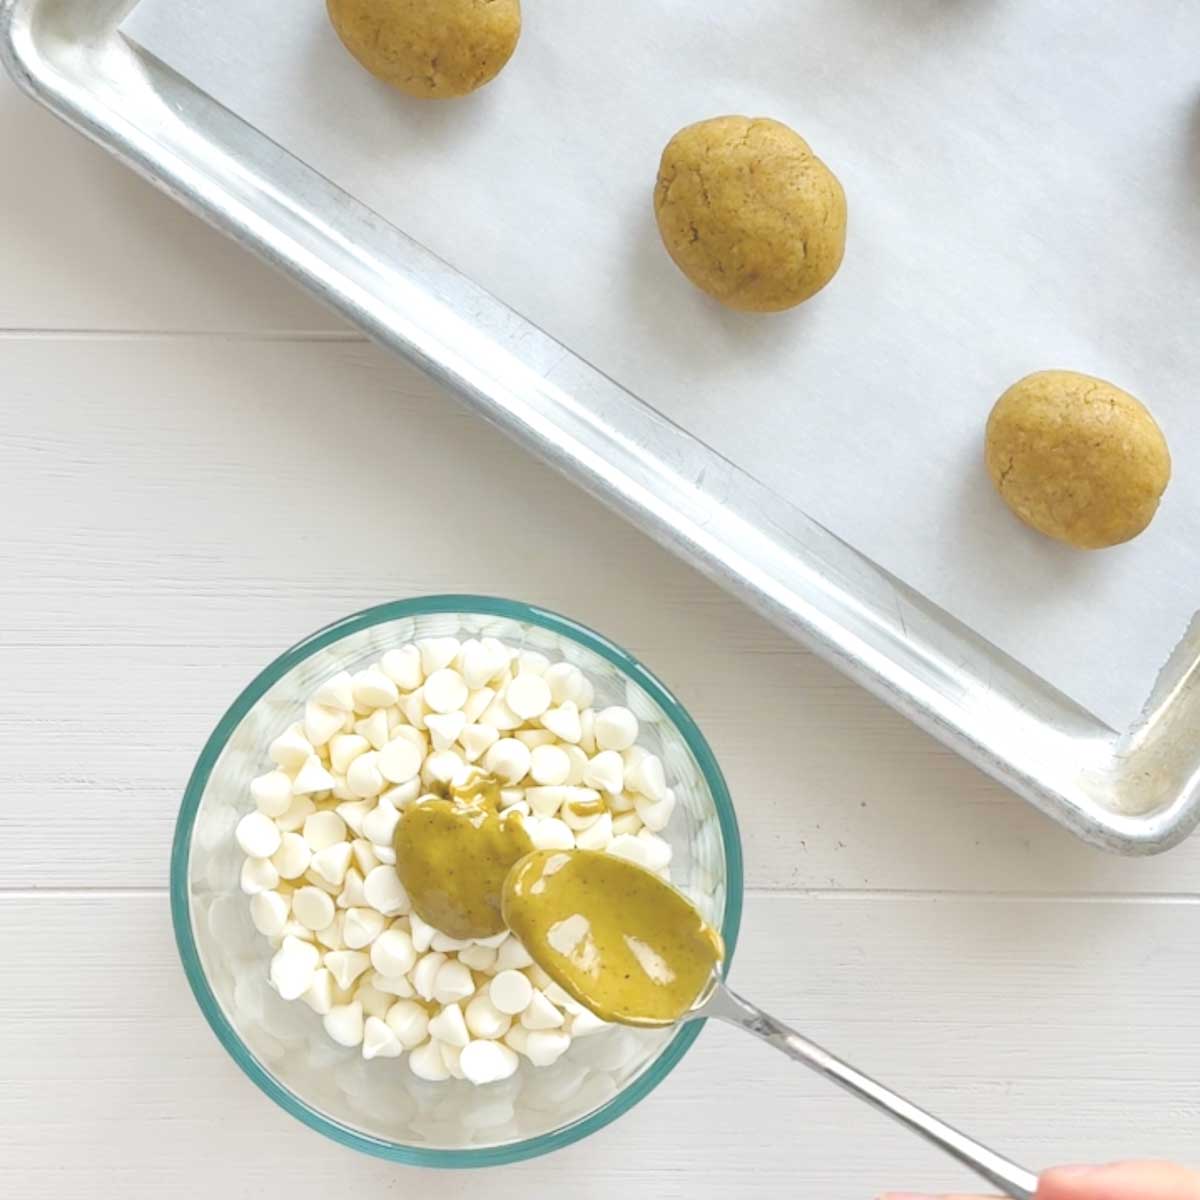 Homemade Pistachio Easter Eggs Recipe - white bean paste cookies